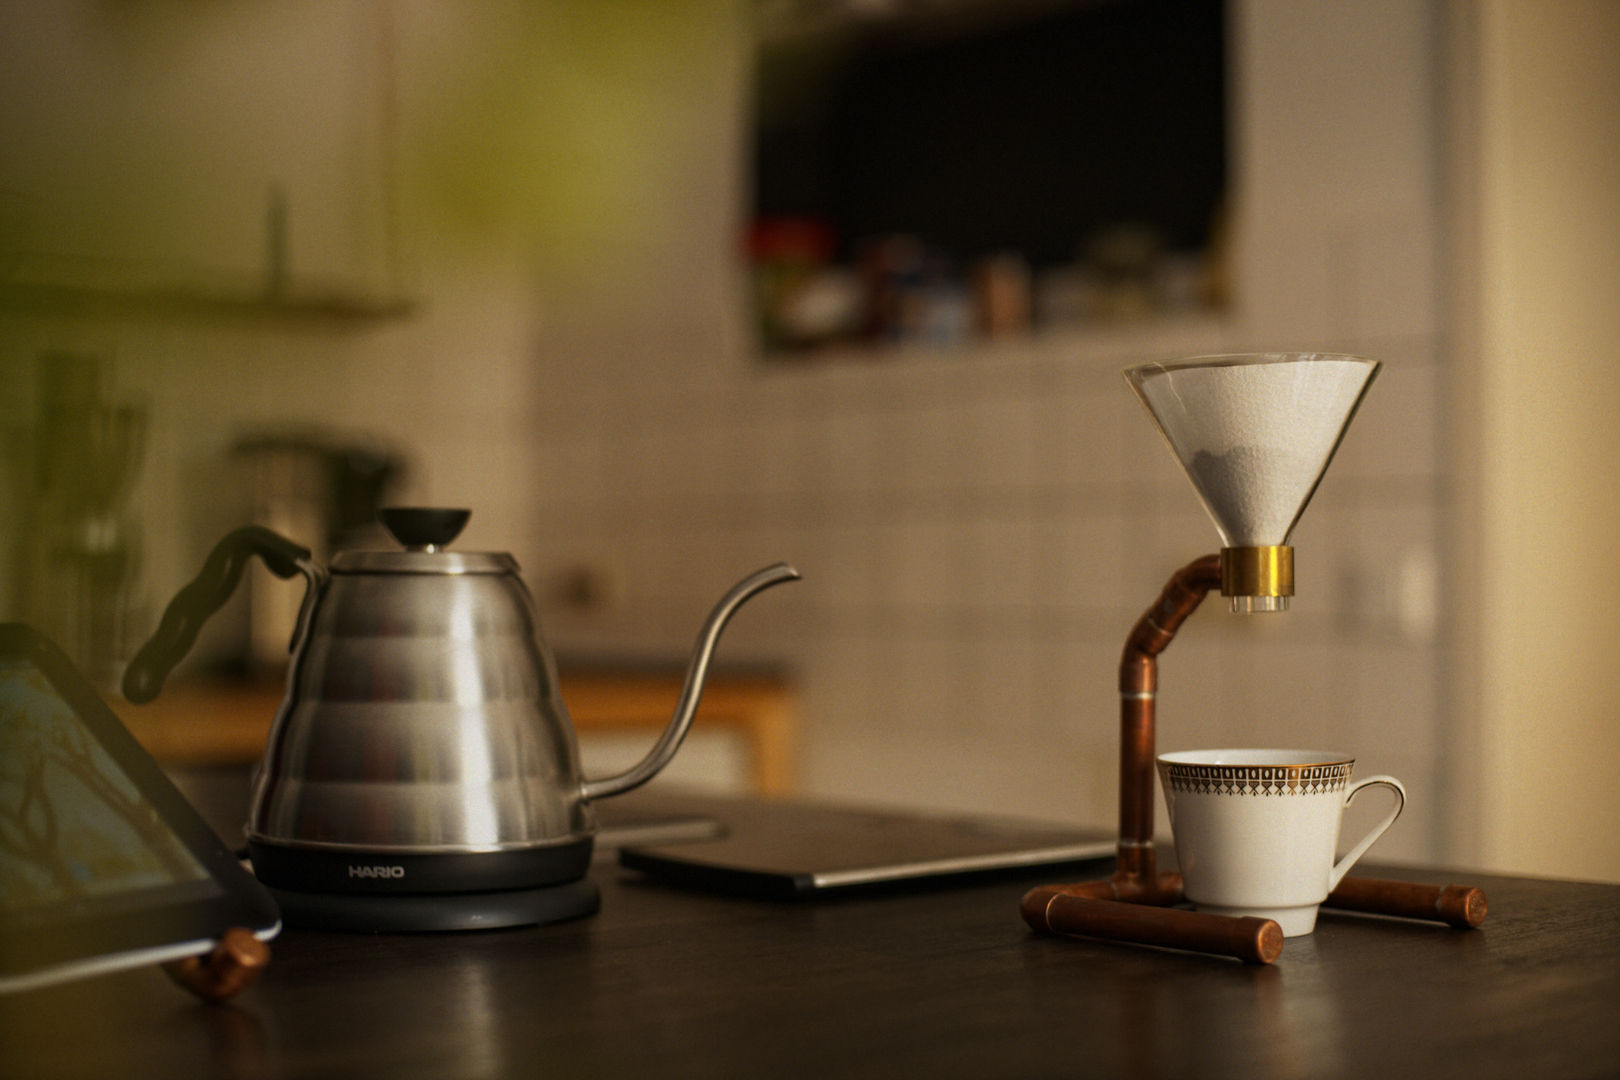 COPPER COFFEE - Dripper - Pour Over Coffee Stand, Drip Coffee Stand, COPPER COFFEE COPPER COFFEE Dapur Gaya Industrial Perunggu Kitchen utensils